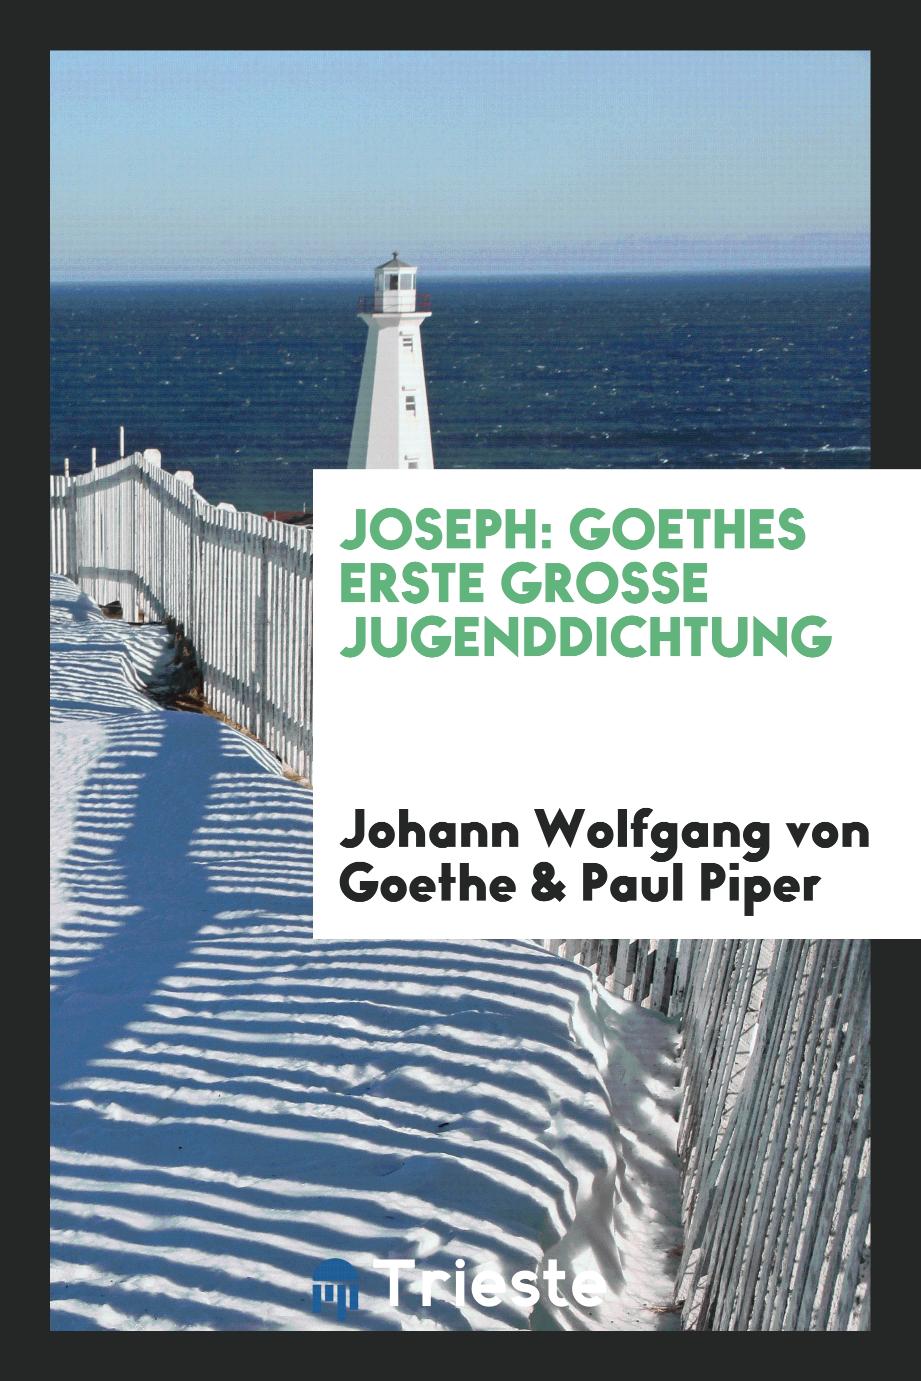 Joseph: Goethes erste grosse Jugenddichtung